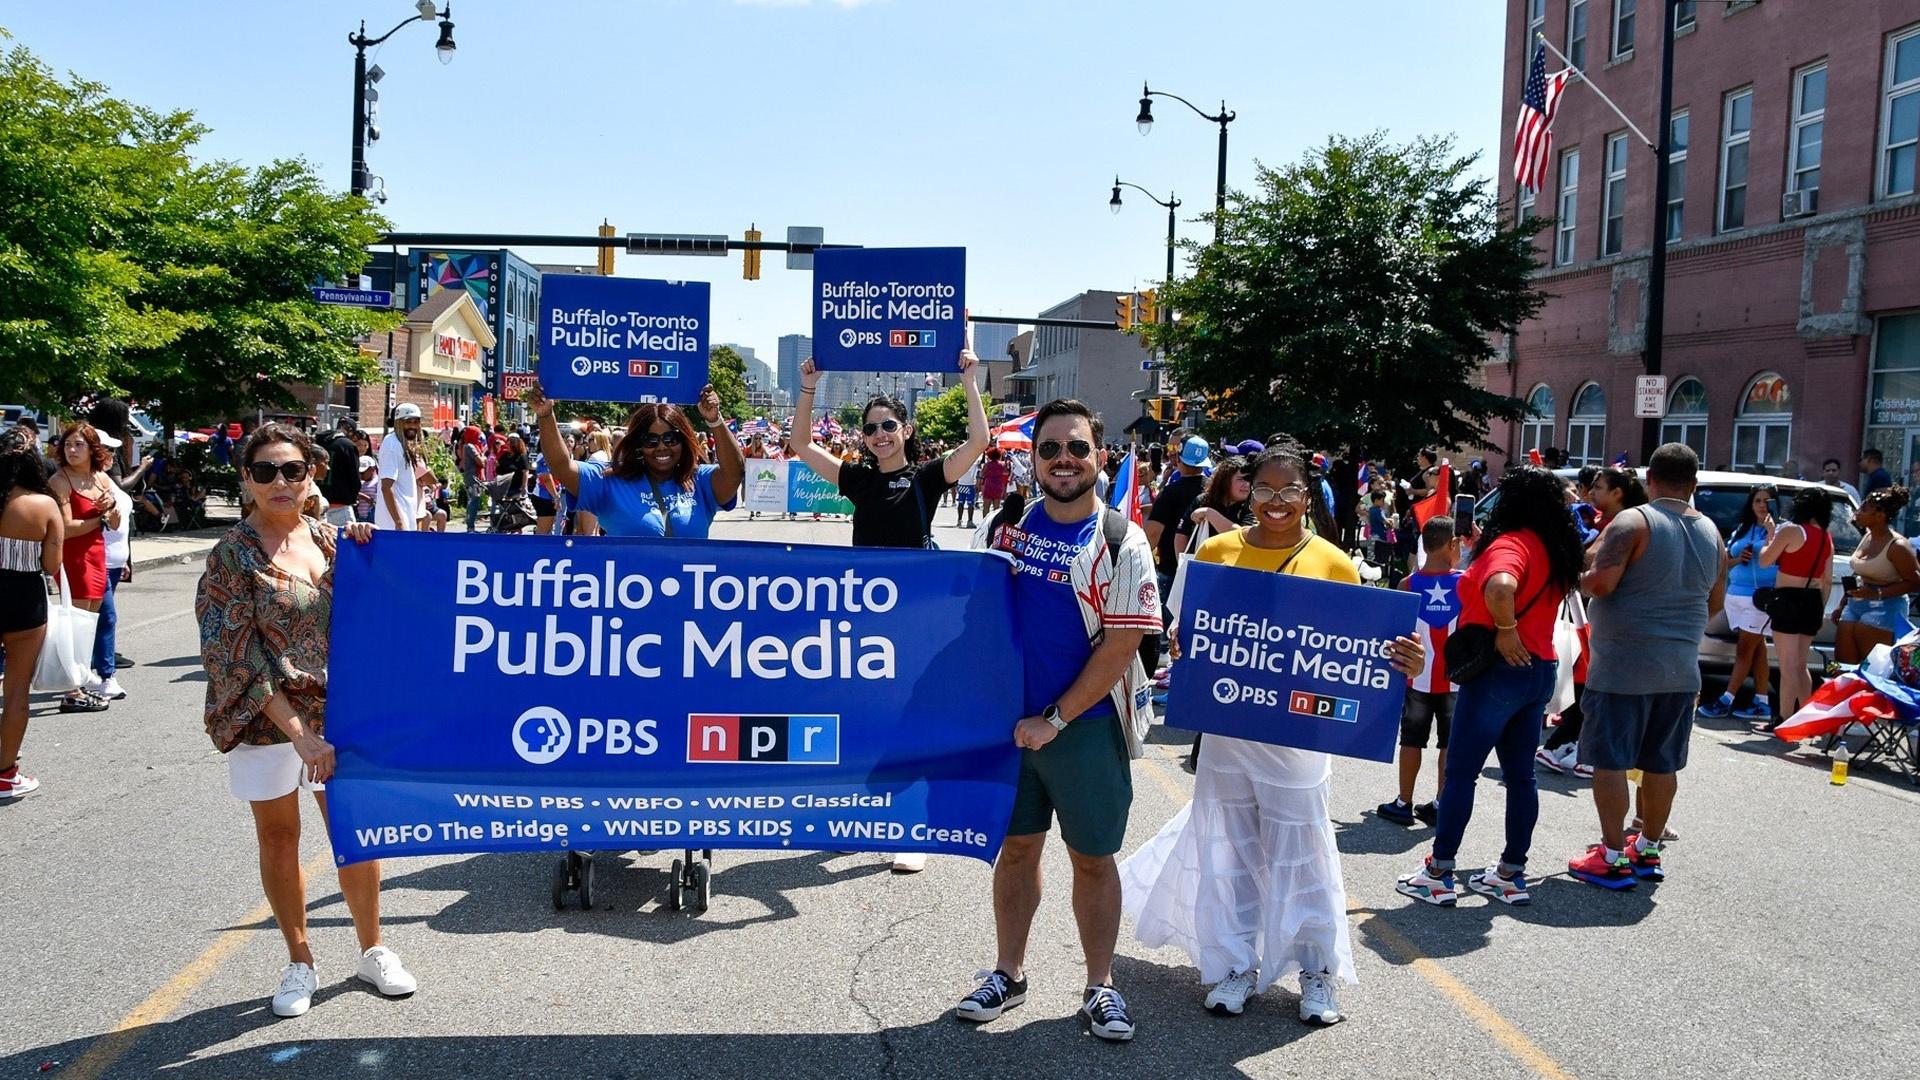 Buffalo Toronot Public Media marching in the Hispanic Day Parade